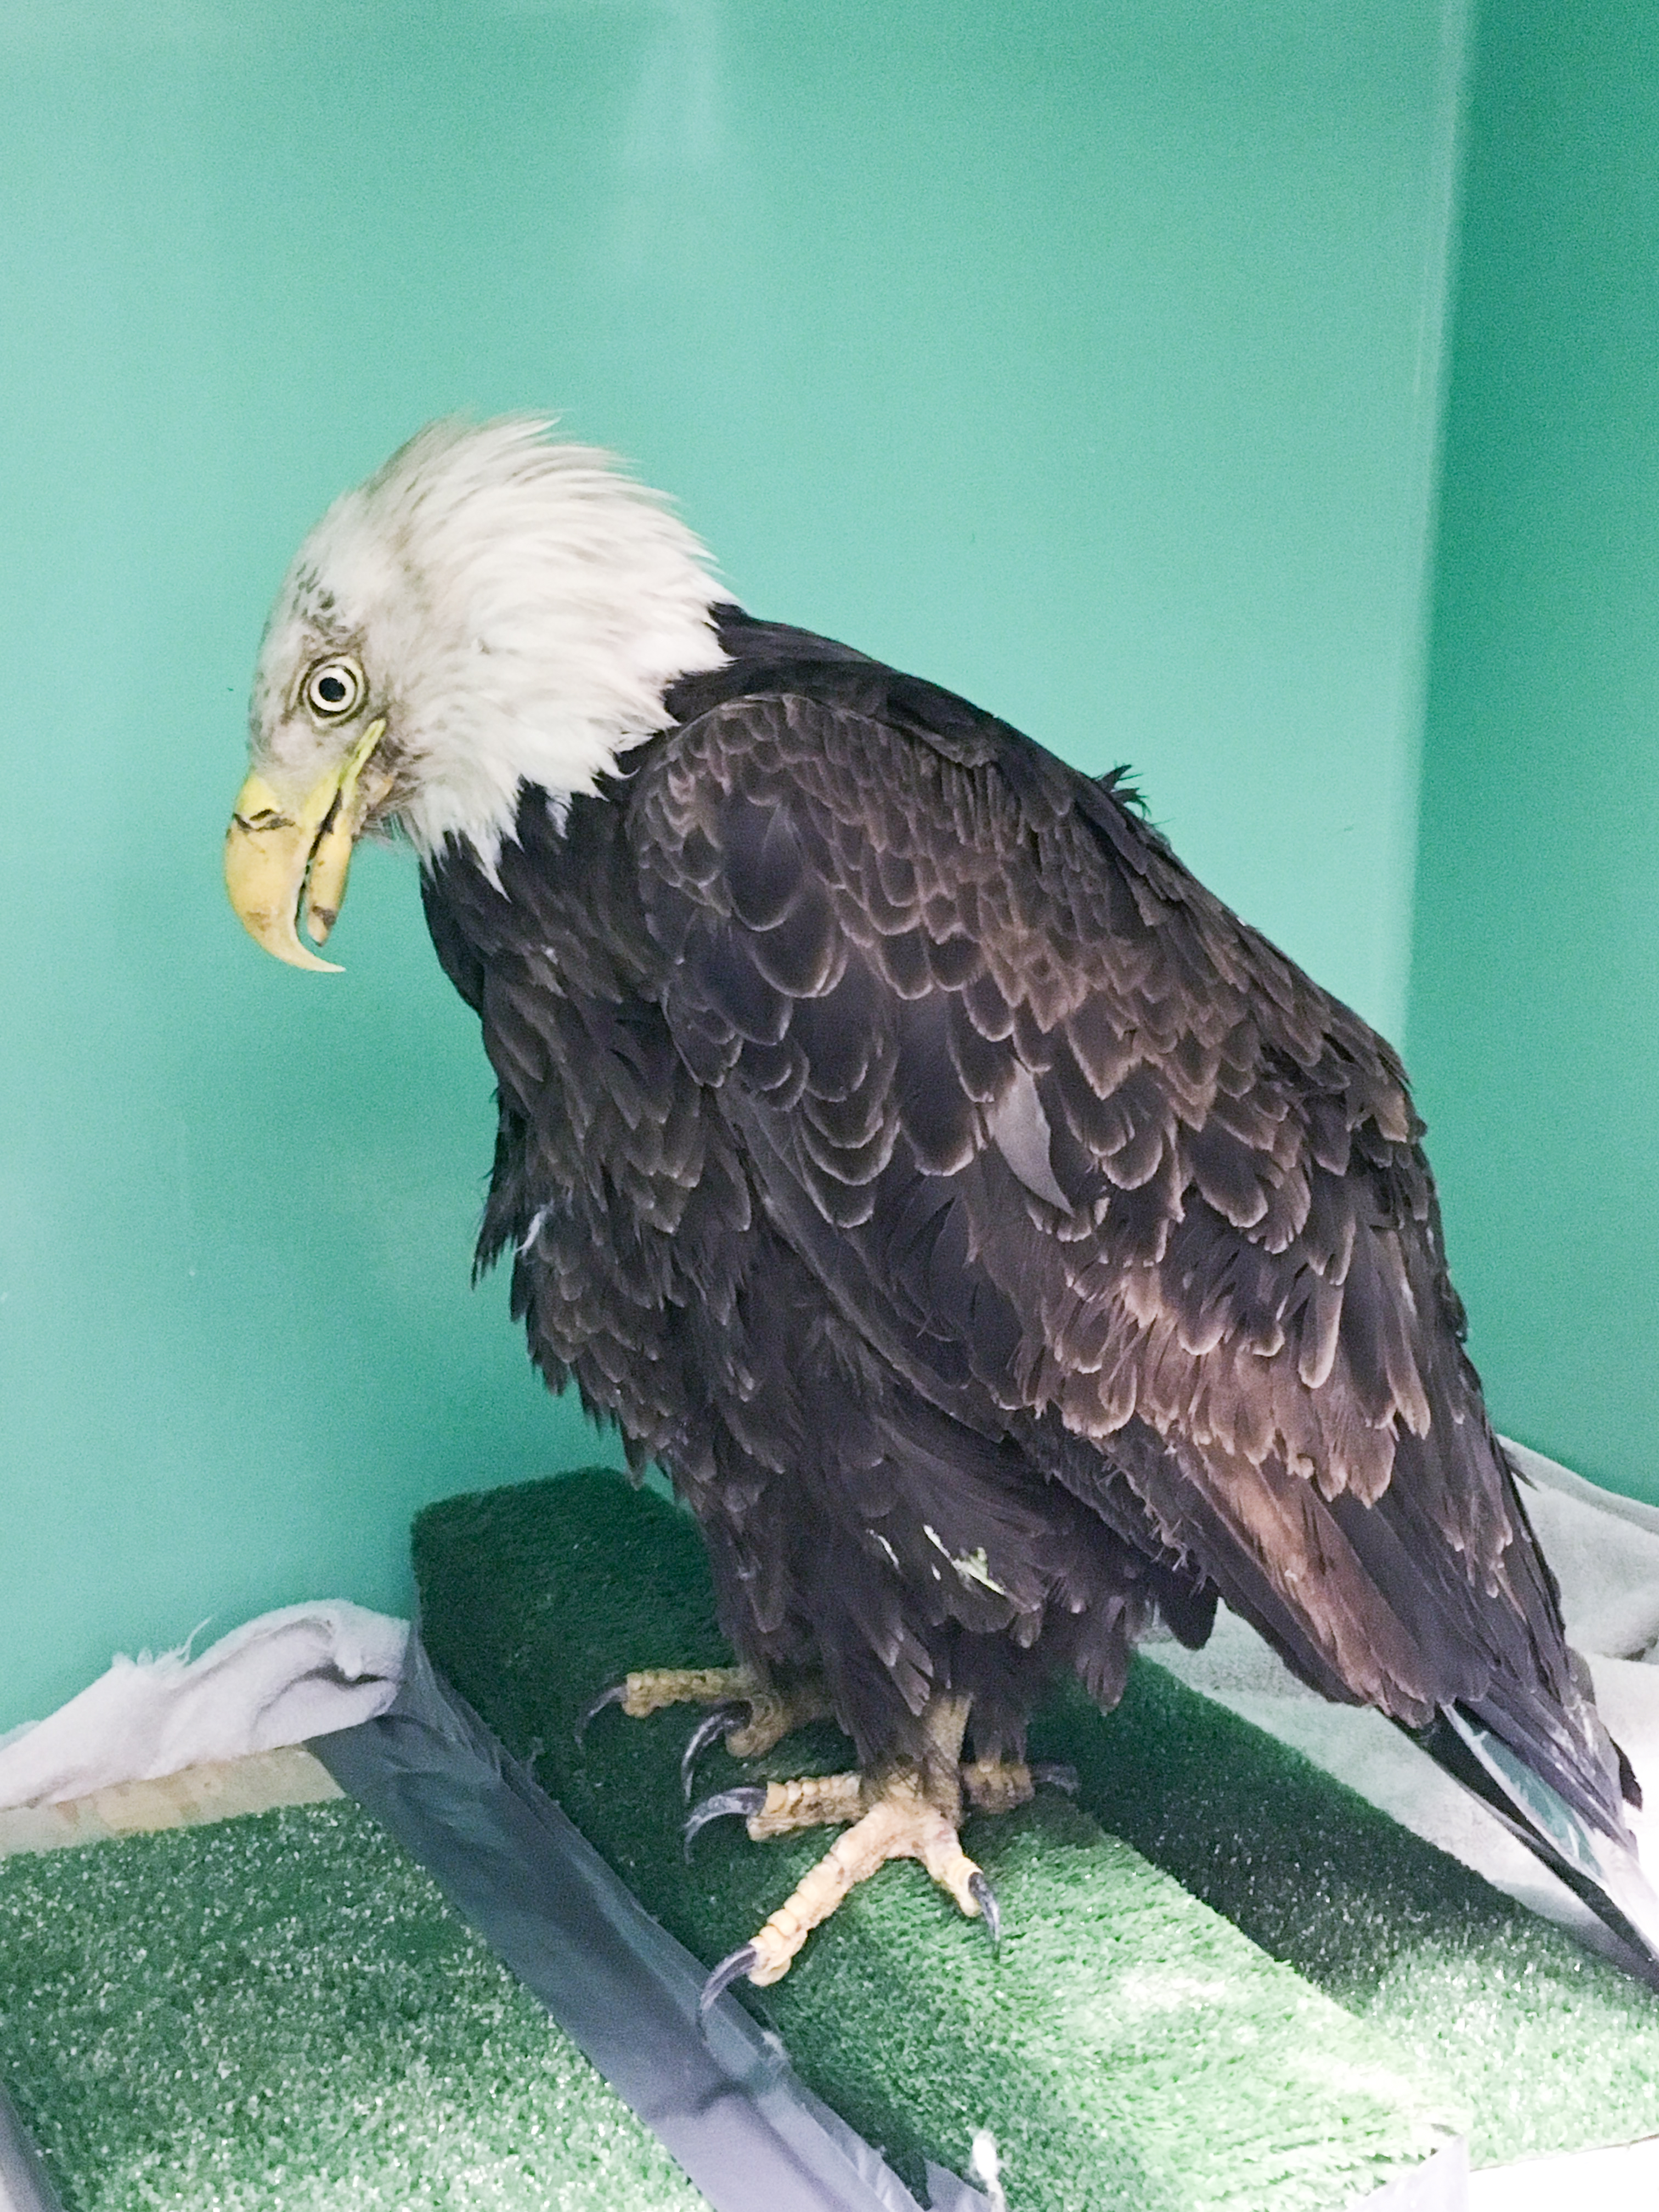 Injured bald eagle is treated, returned to wild